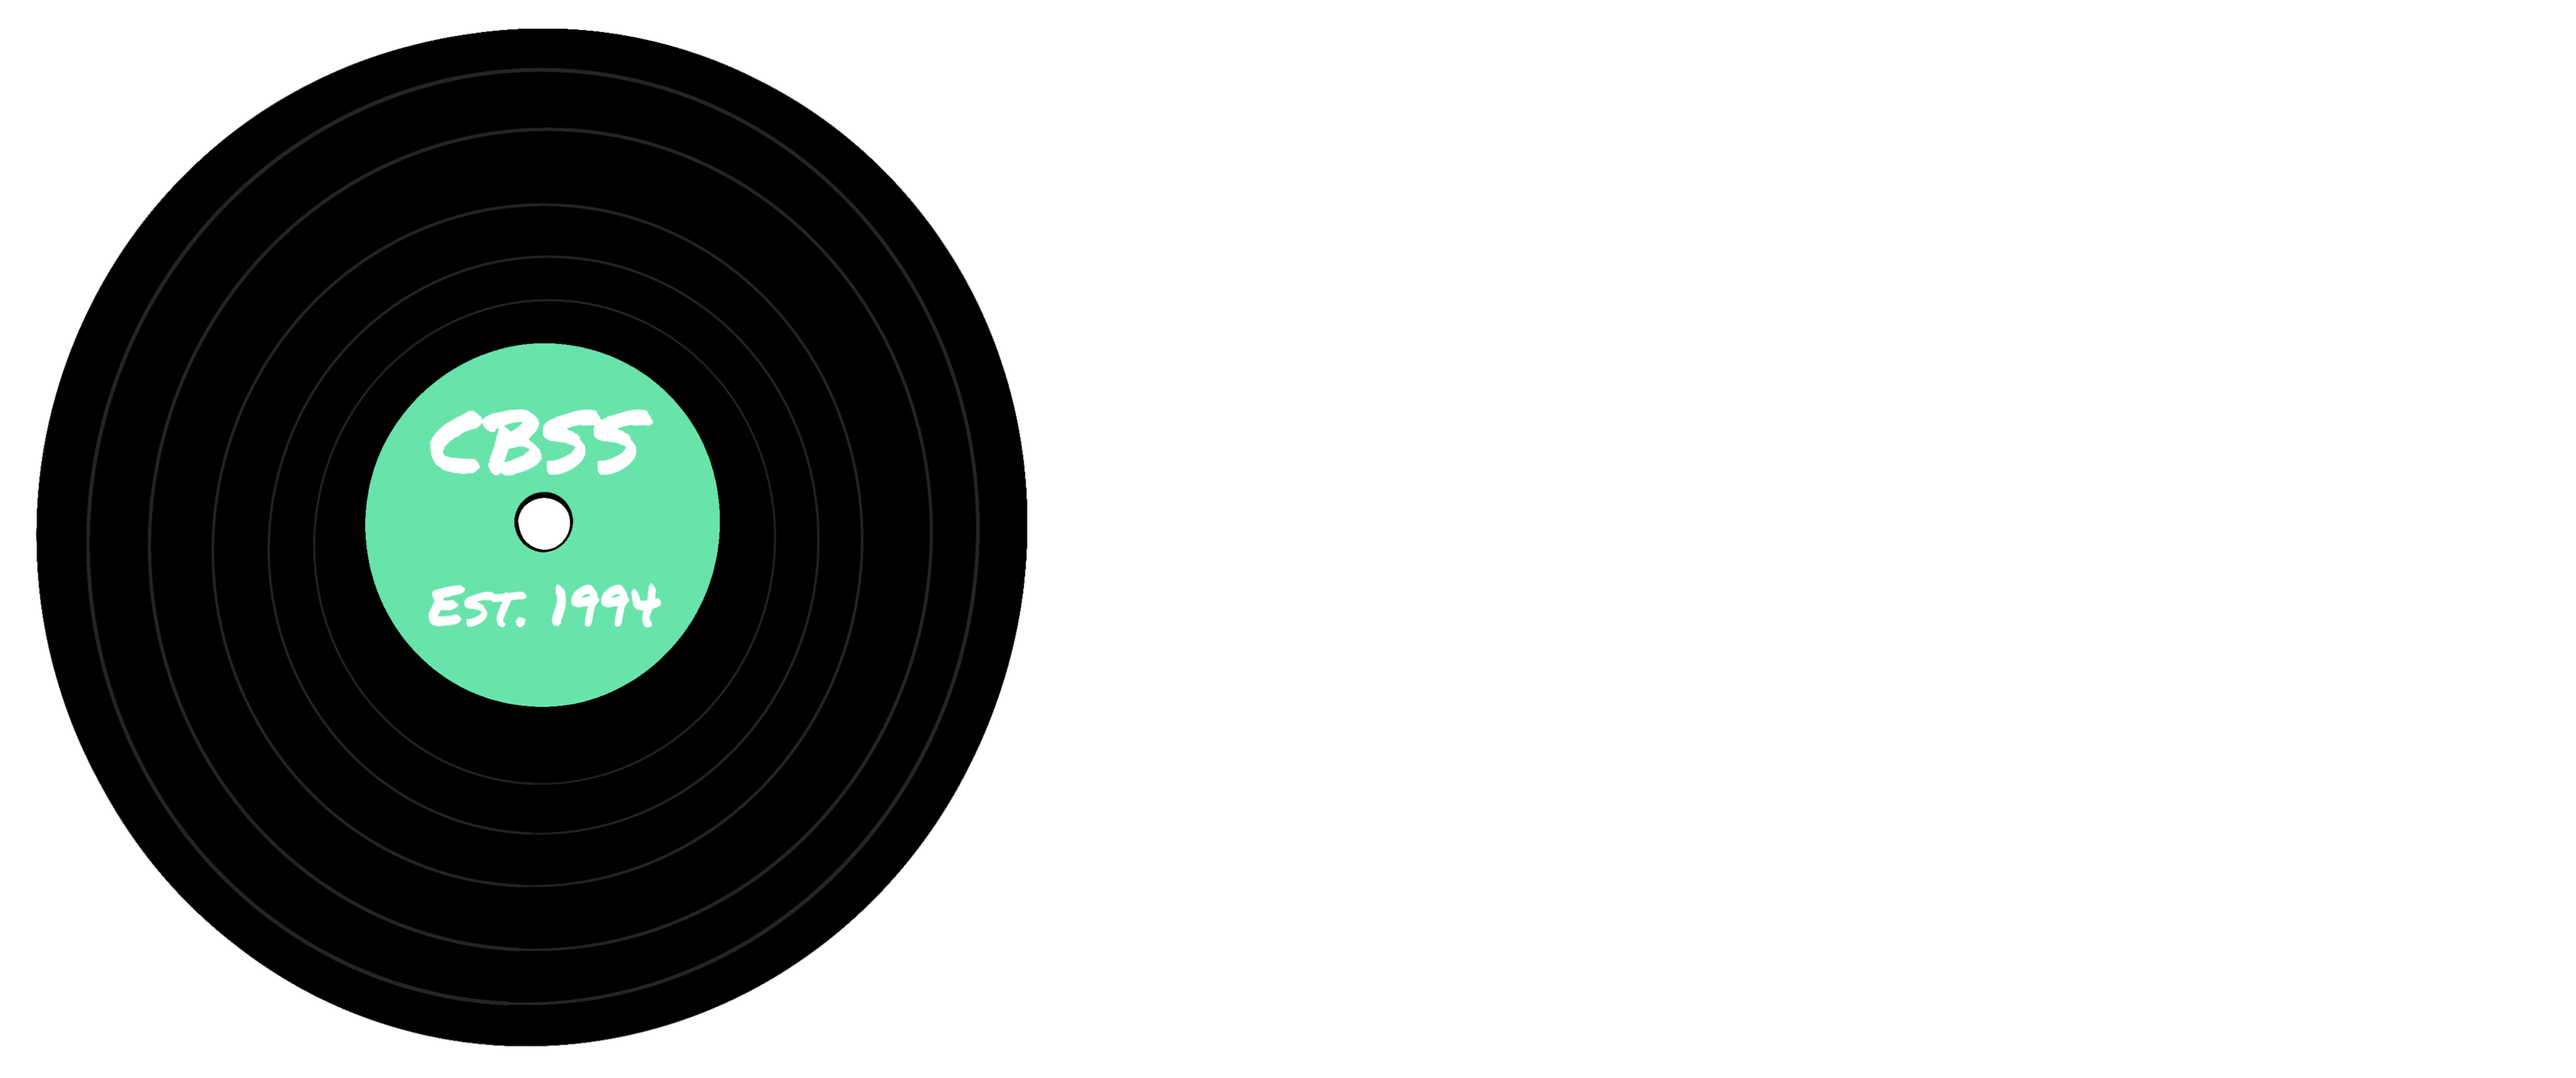 Crystal Blue Studios